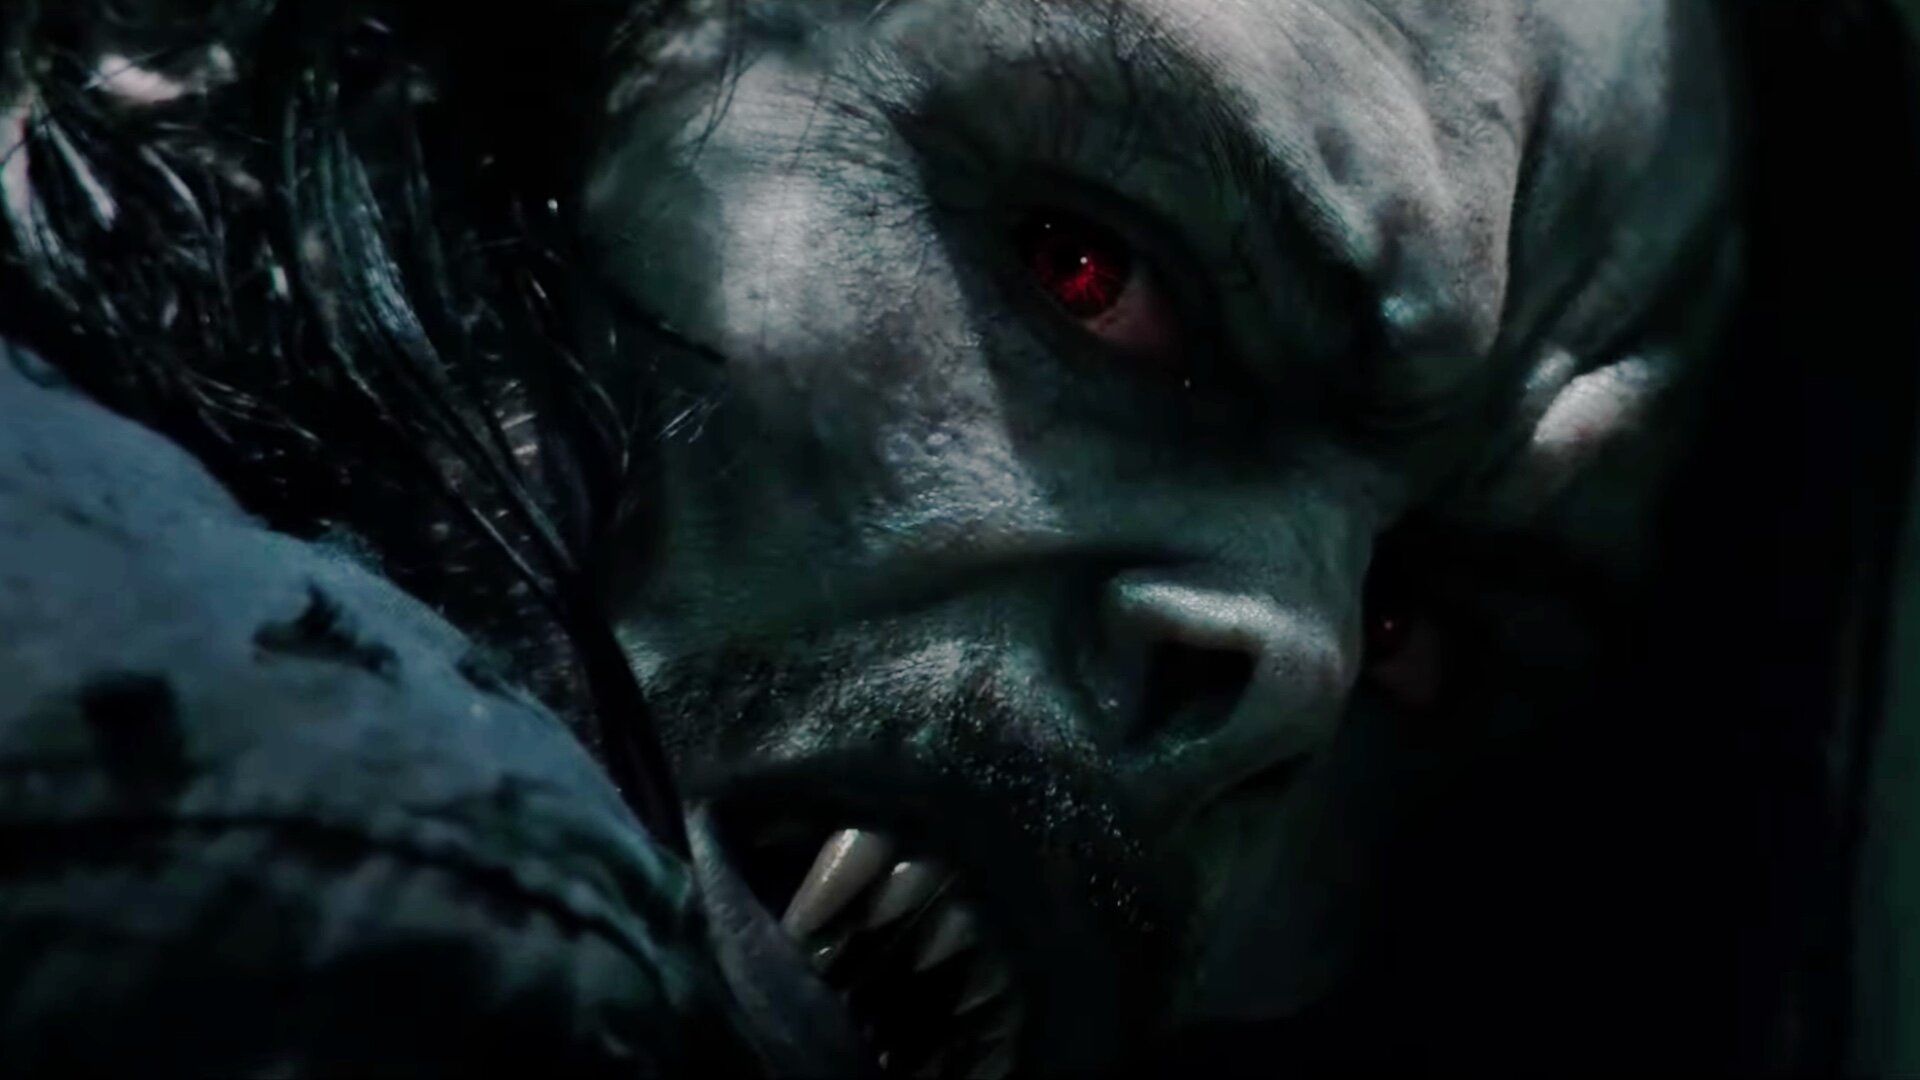 impressive-first-trailer-released-for-morbius-starring-jared-leto-social